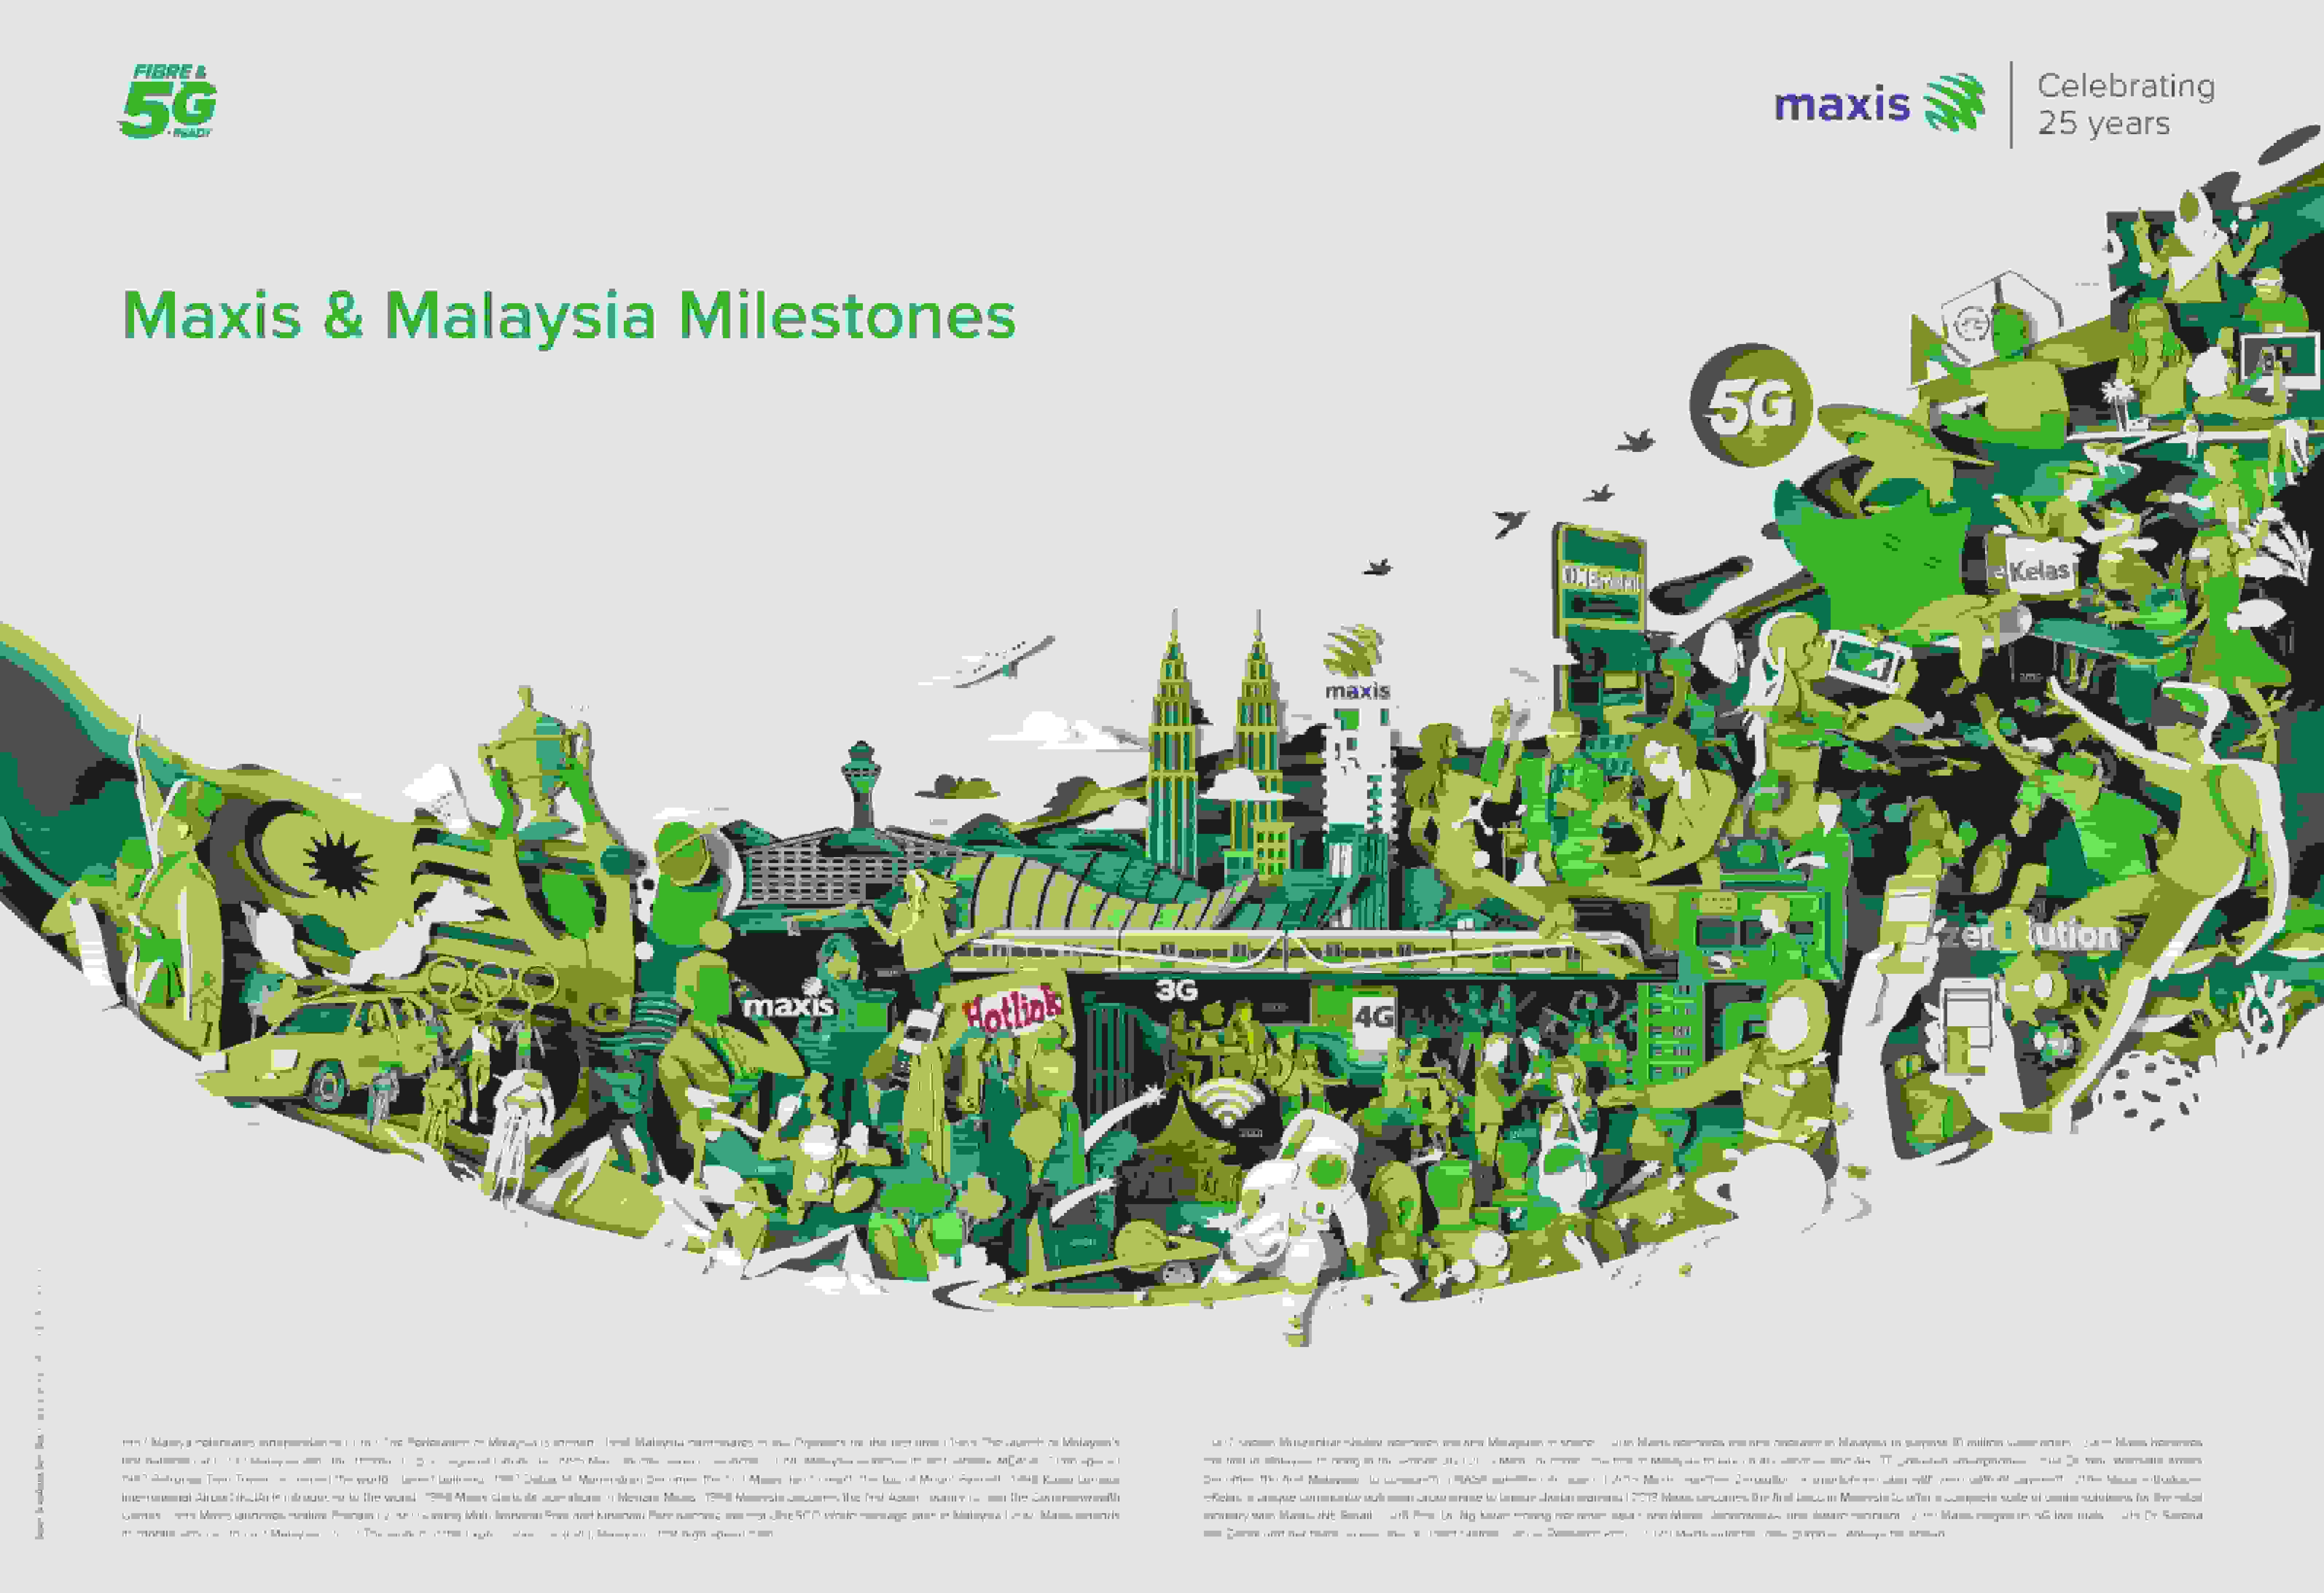 Maxis x Malaysia milestones